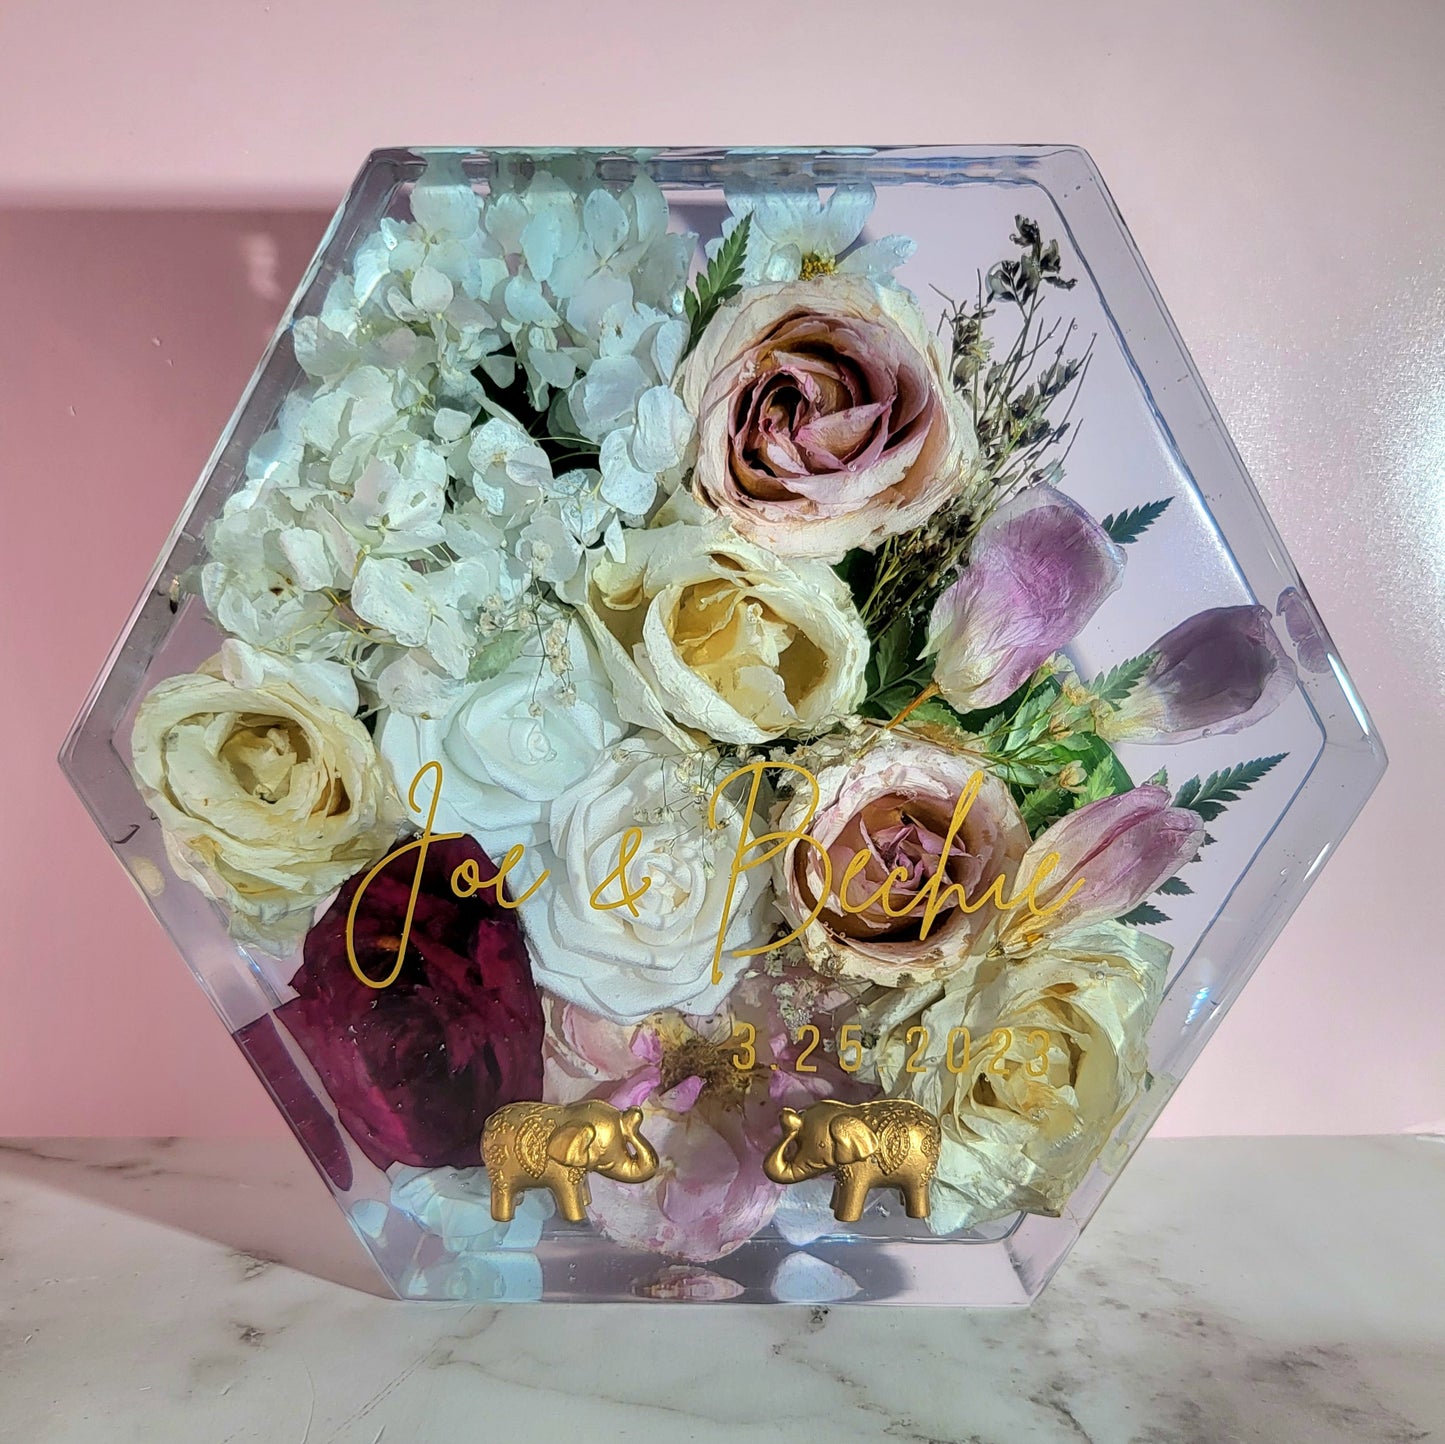 Huge Collection Hexagon Floral Preservation 3D Resin Wedding Bouquet Preservation Keepsake Gift Save Your Wedding Flowers Forever - flofloflowery